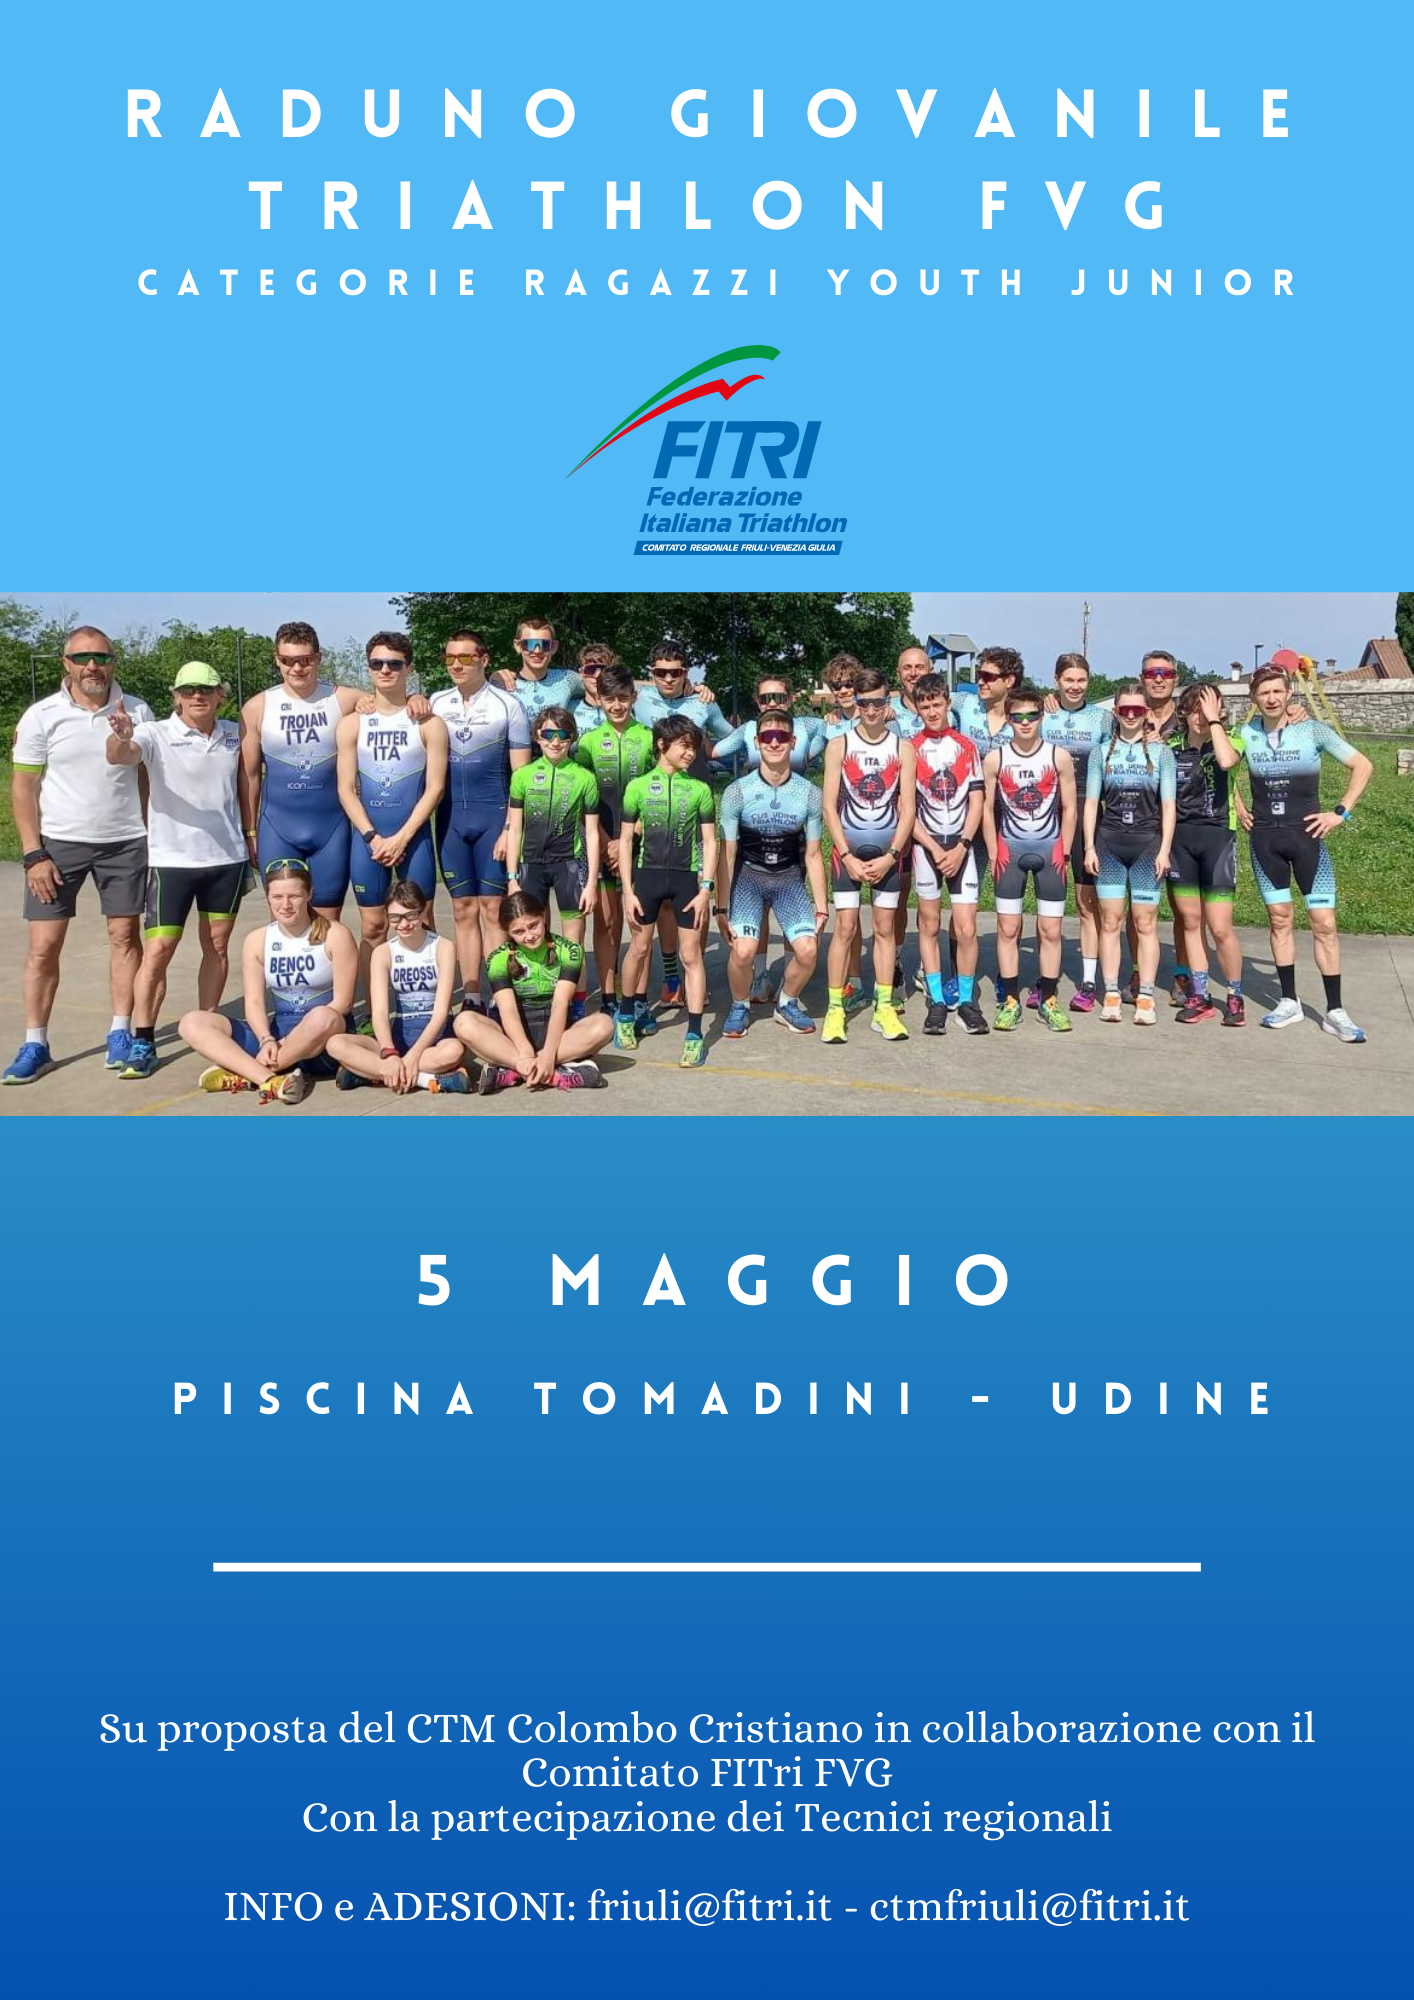 5 Maggio raduno giovanile triathlon FVG